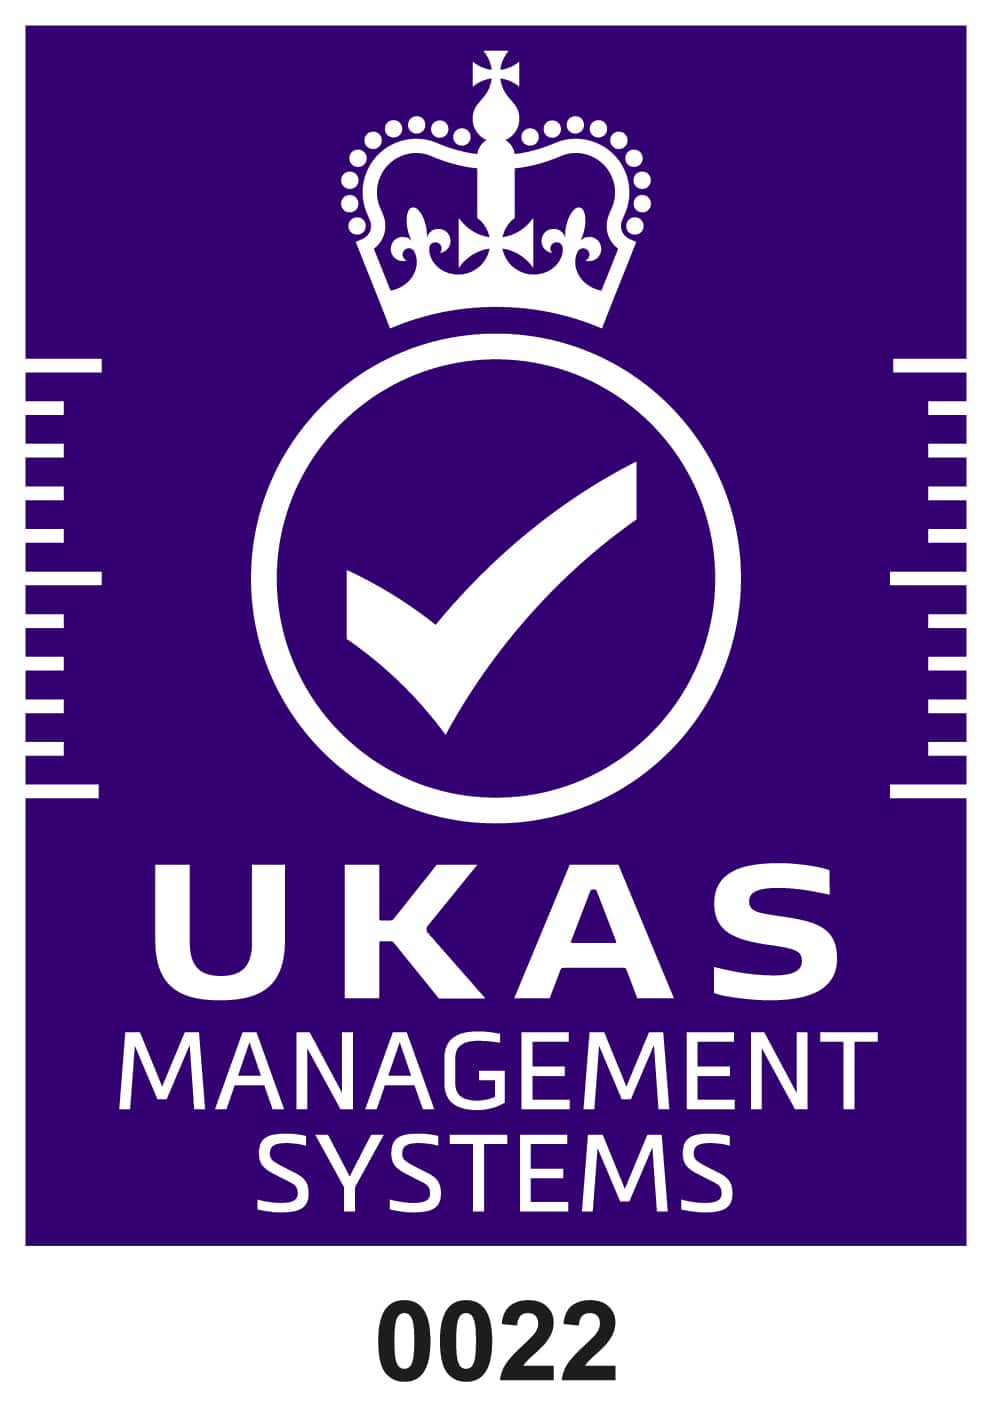 Ukas accreditation symbol white on purple management systems